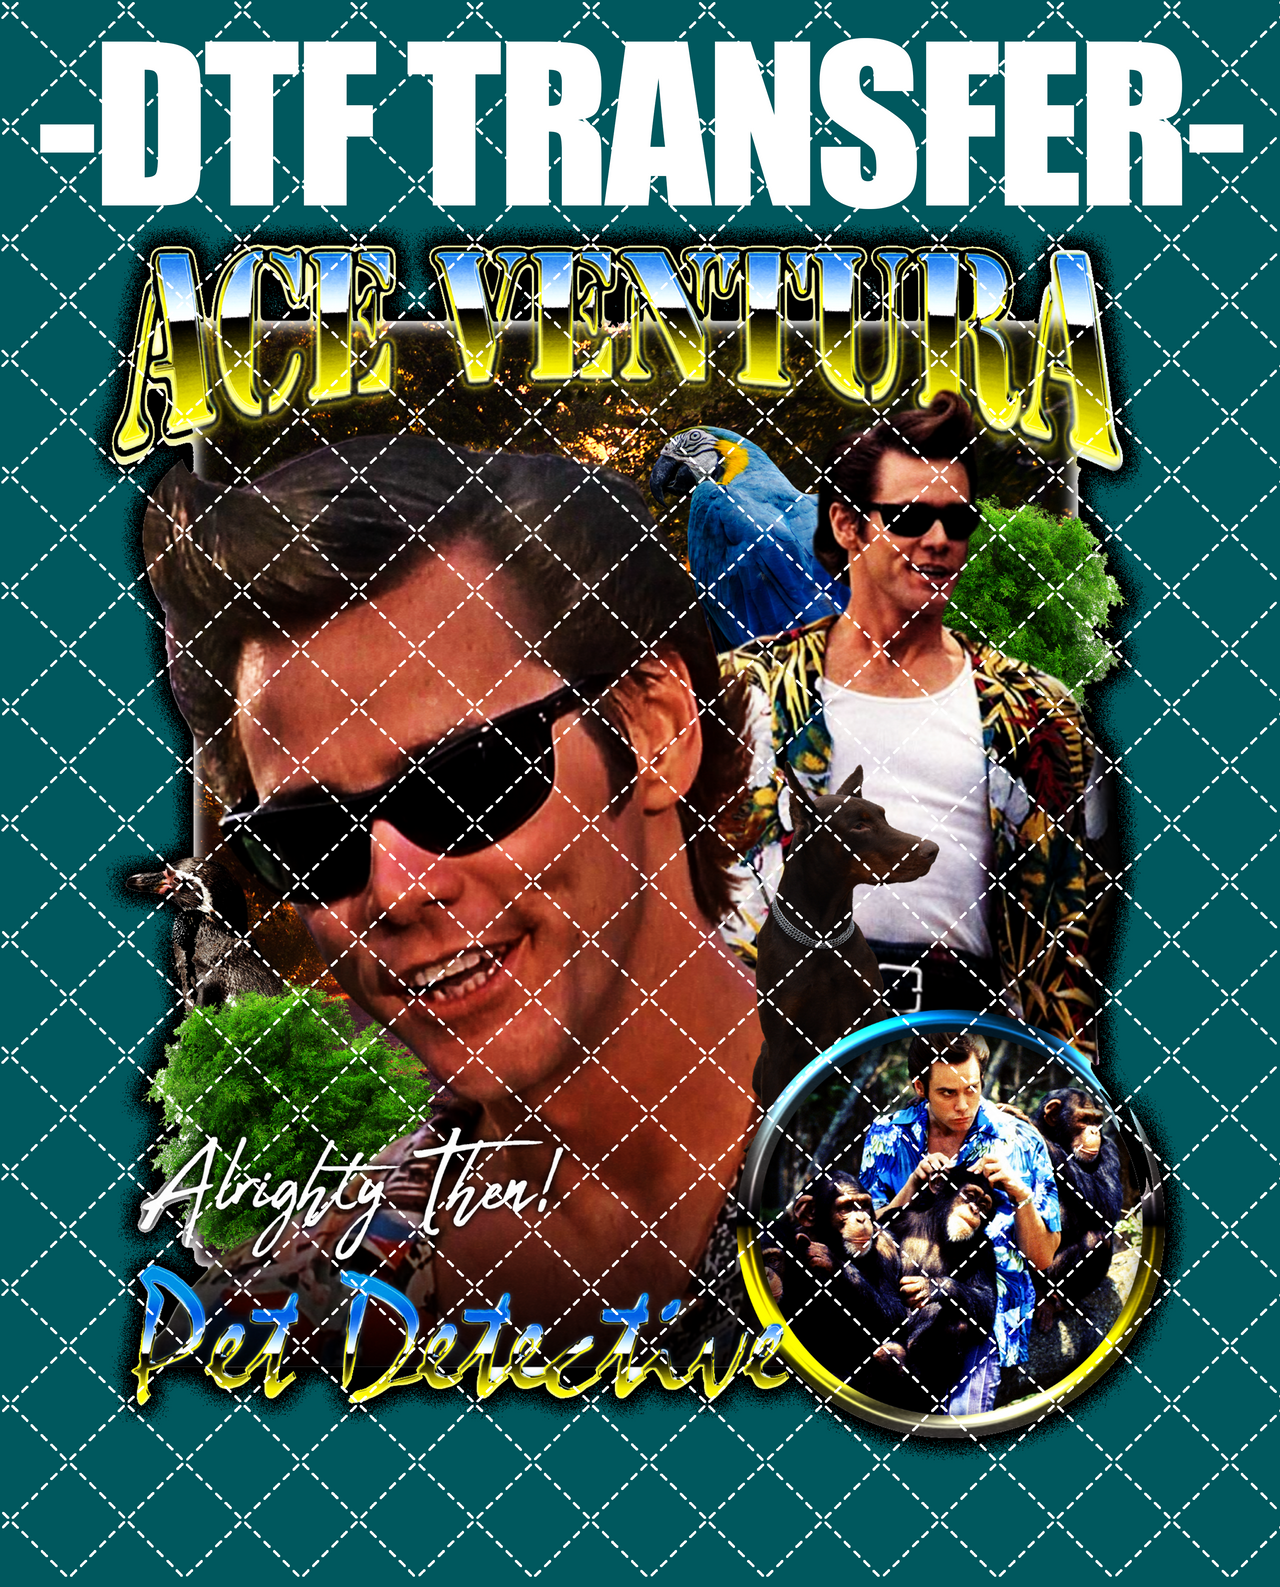 Ace Ventura - DTF Transfer (Ready To Press)